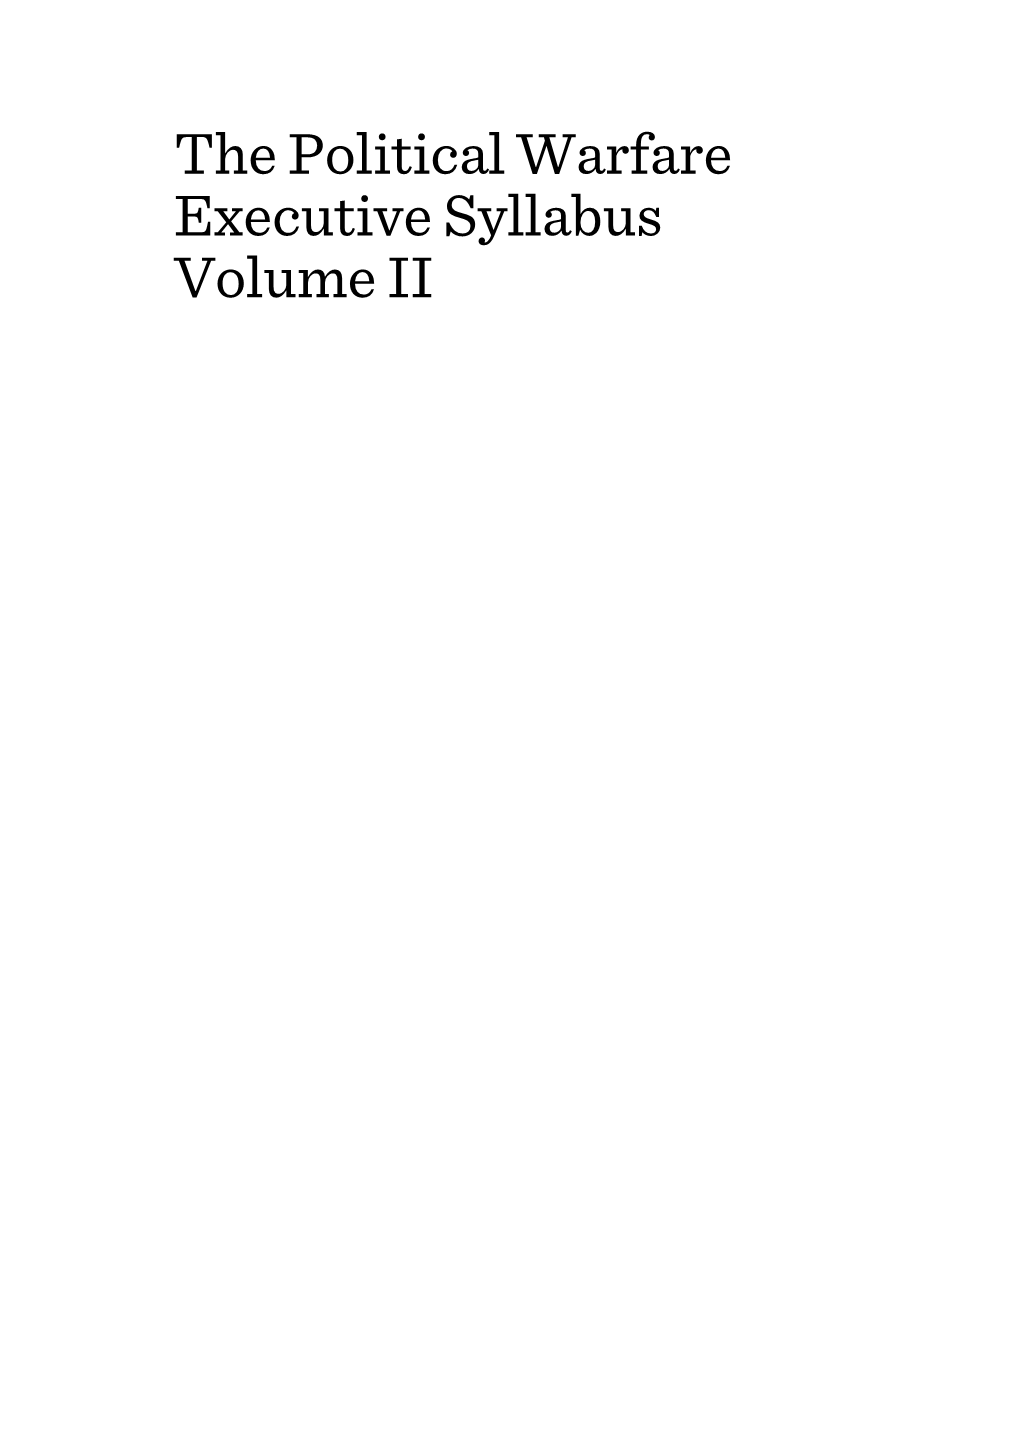 The Political Warfare Executive Syllabus Volume II